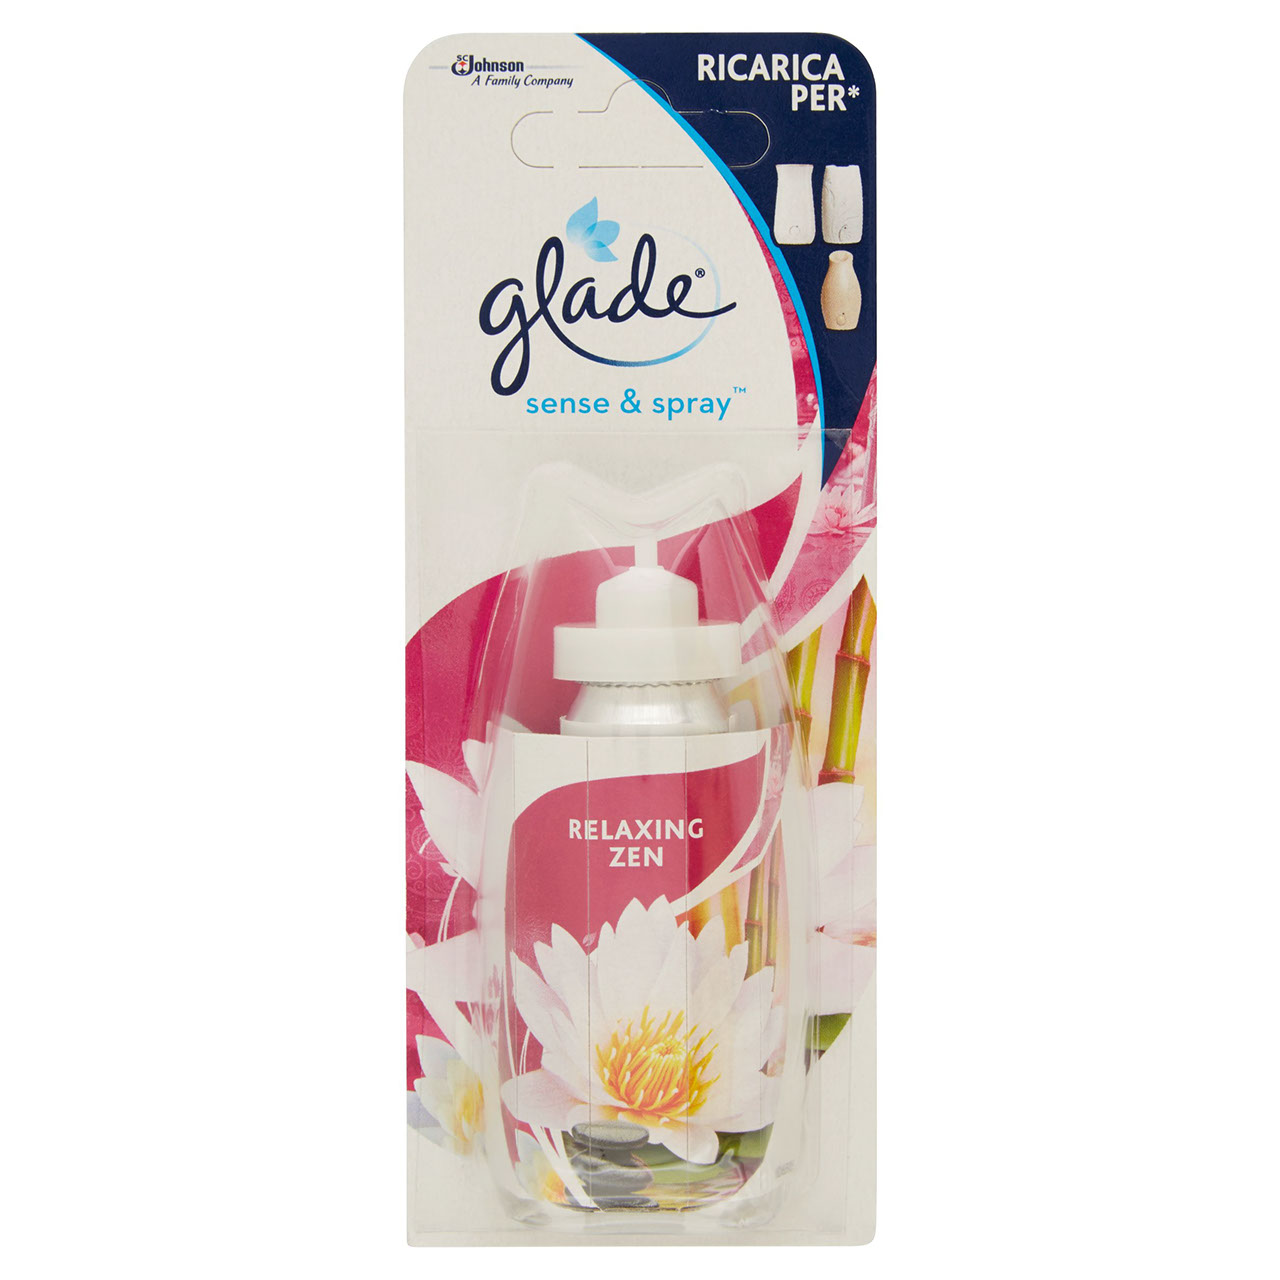 Profumatore Glade Sense & Spray Relaxing Zen 18ml